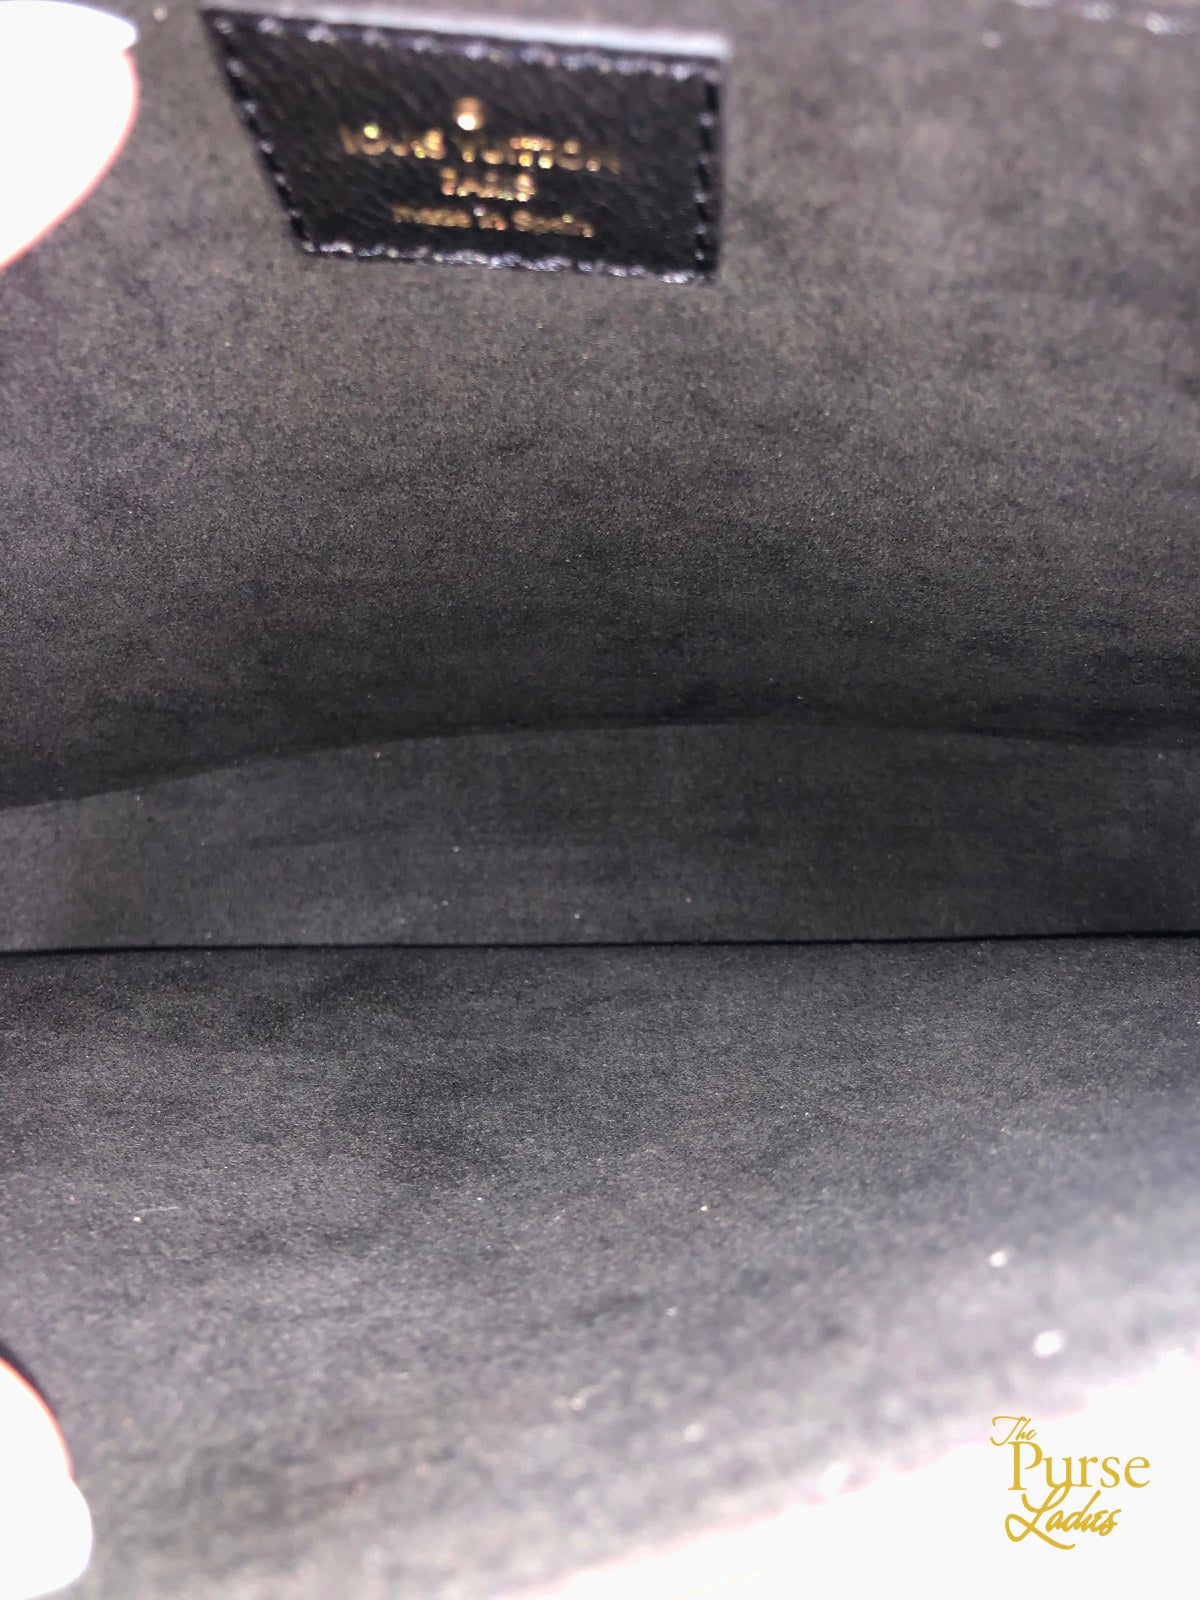 W2C Louis Vuitton bum bag : DHgate